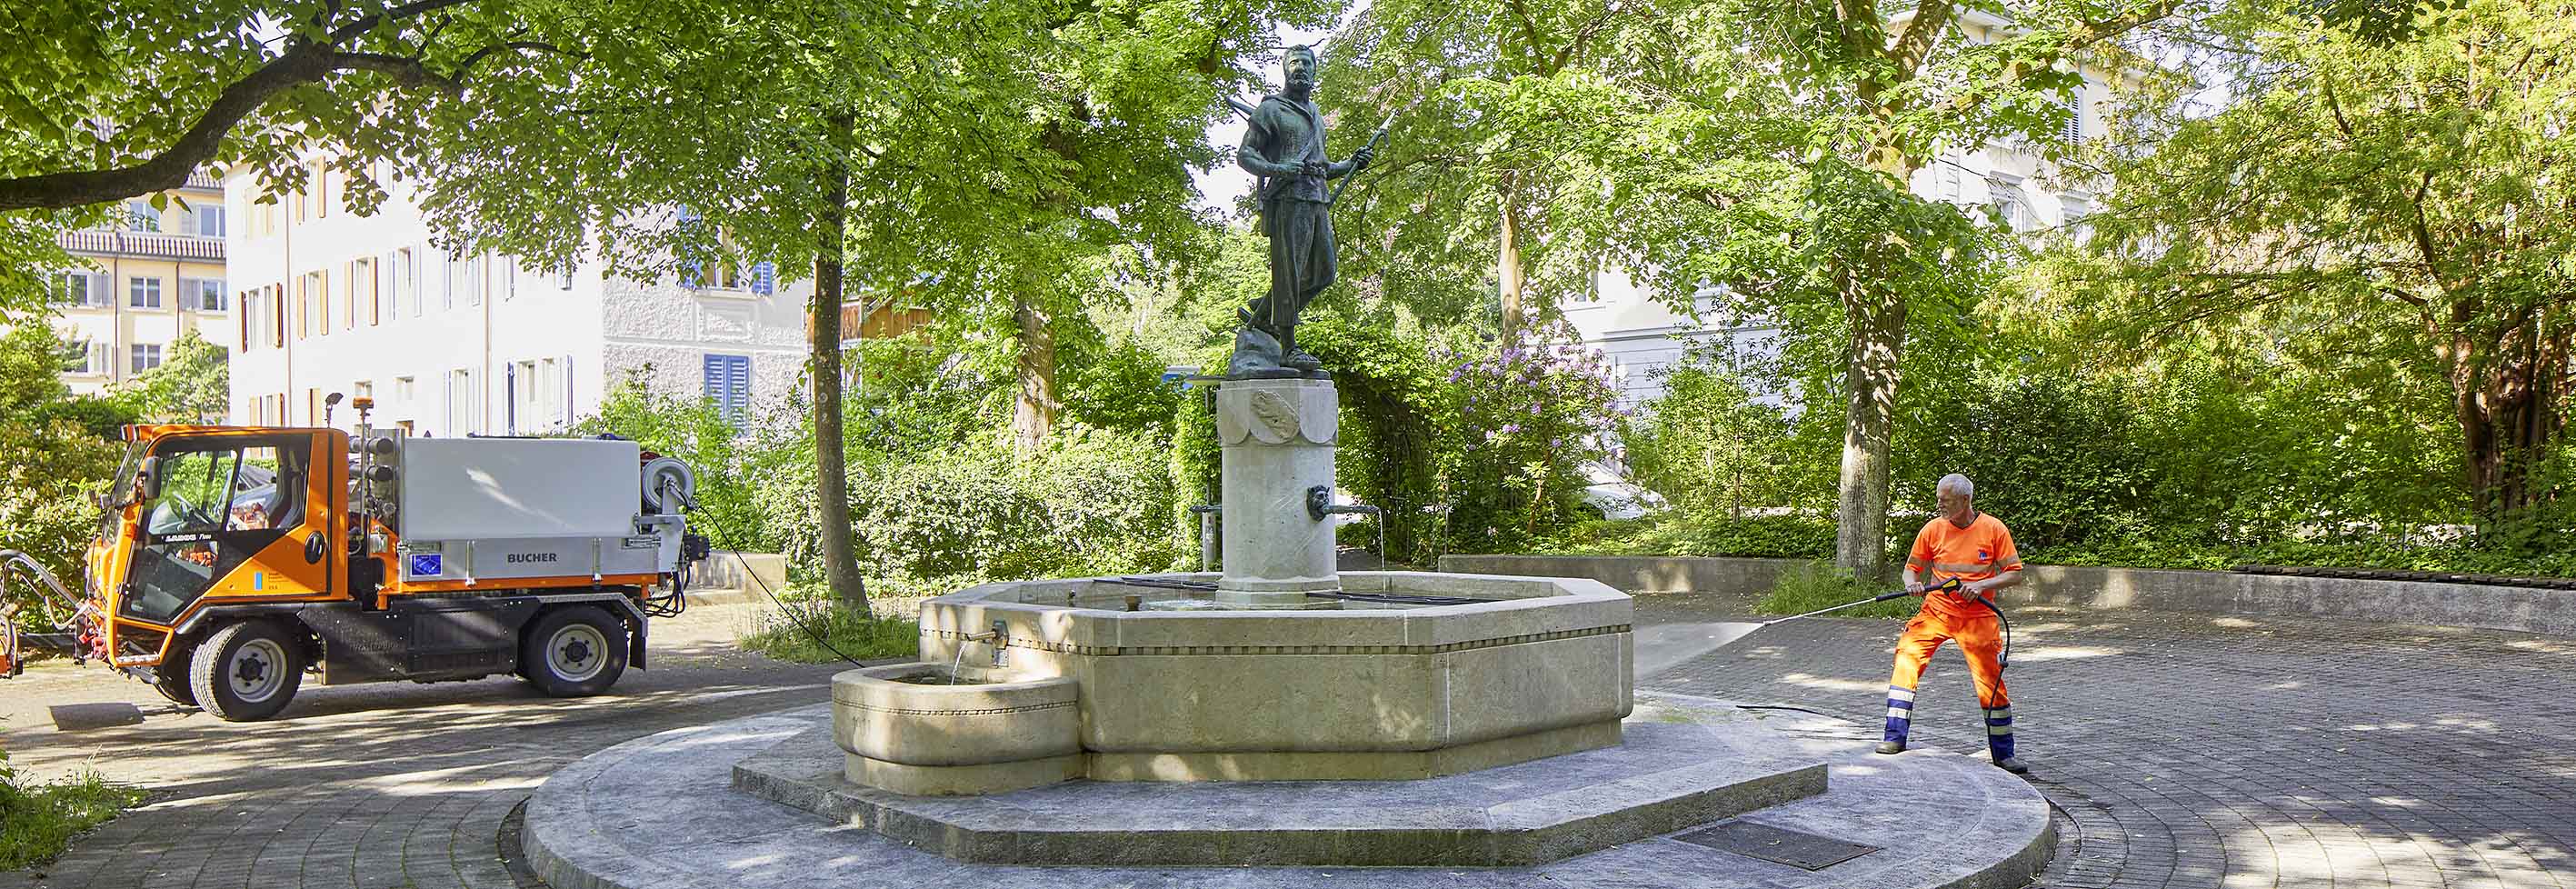 Tellbrunnen im Lindengarten